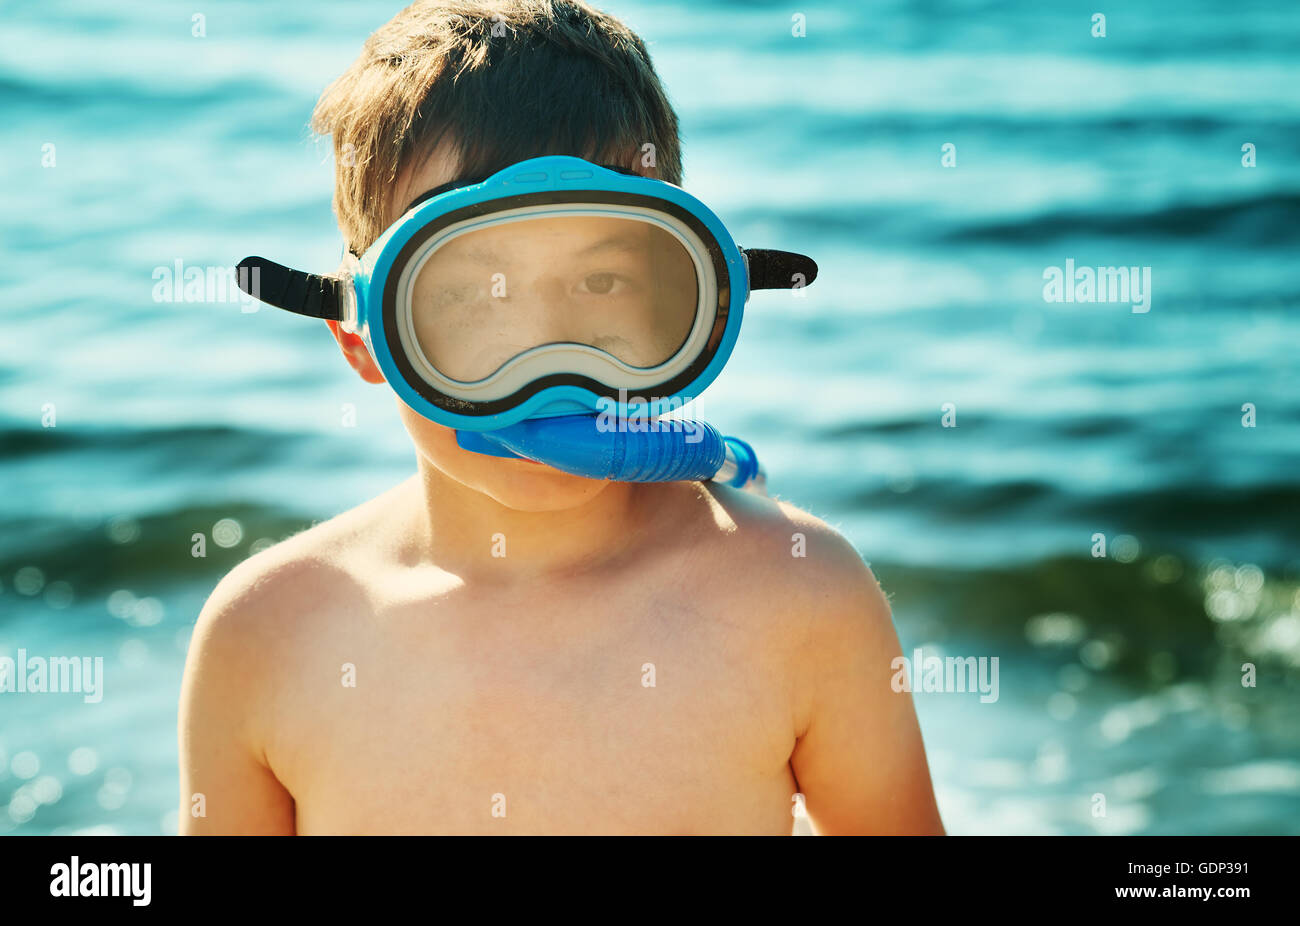 Maschera Da Nuoto Immagini e Fotos Stock - Alamy